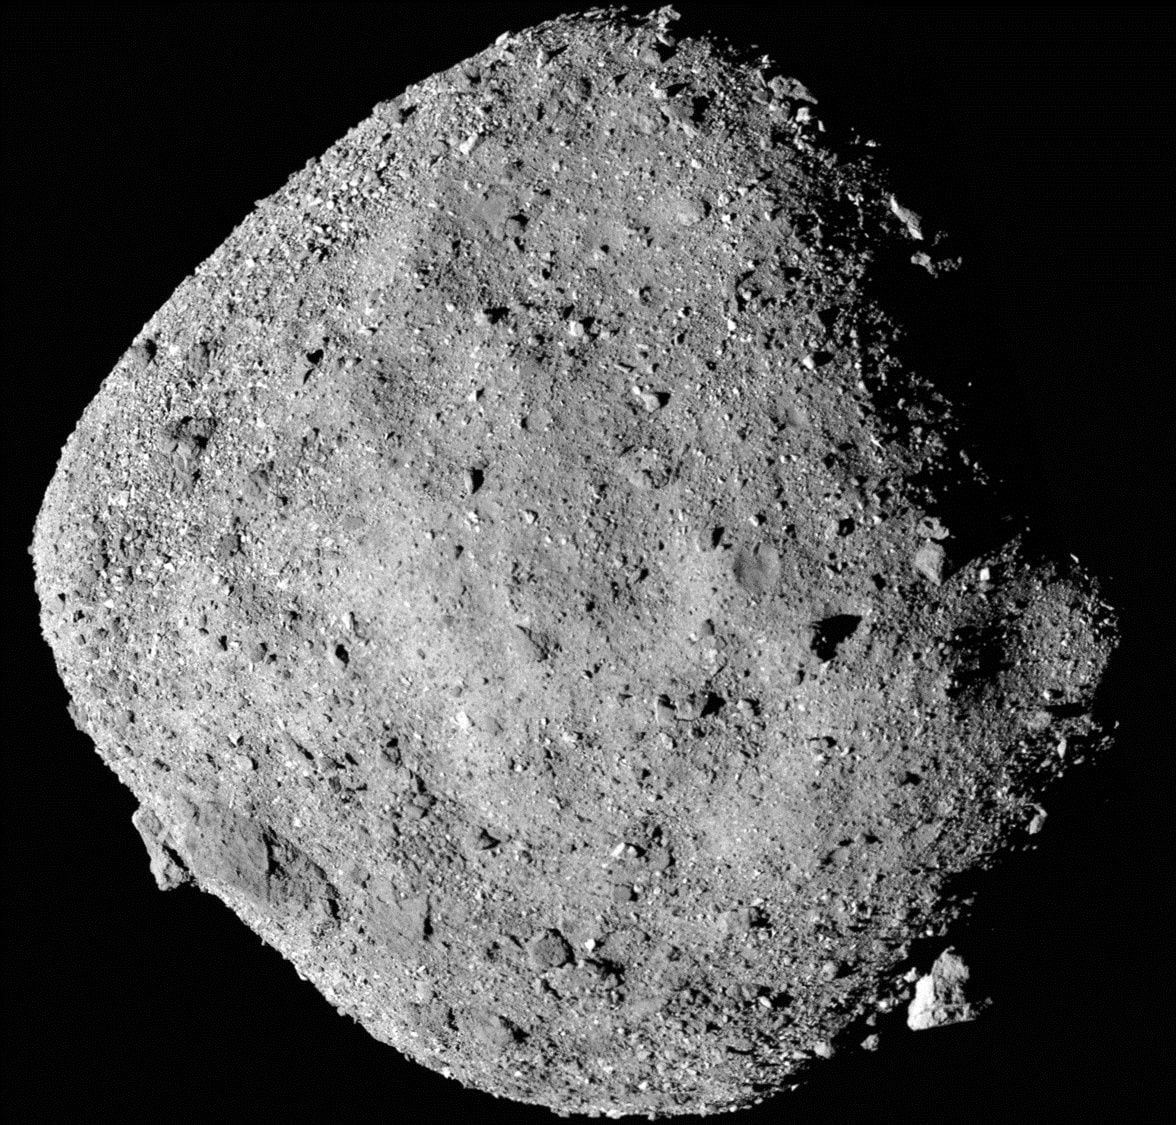 Primer plano del asteroide Bennu tomados por la nave OSIRIS-REx en 2018 a 24 km de distancia (NASA/Goddard/University of Arizona)
